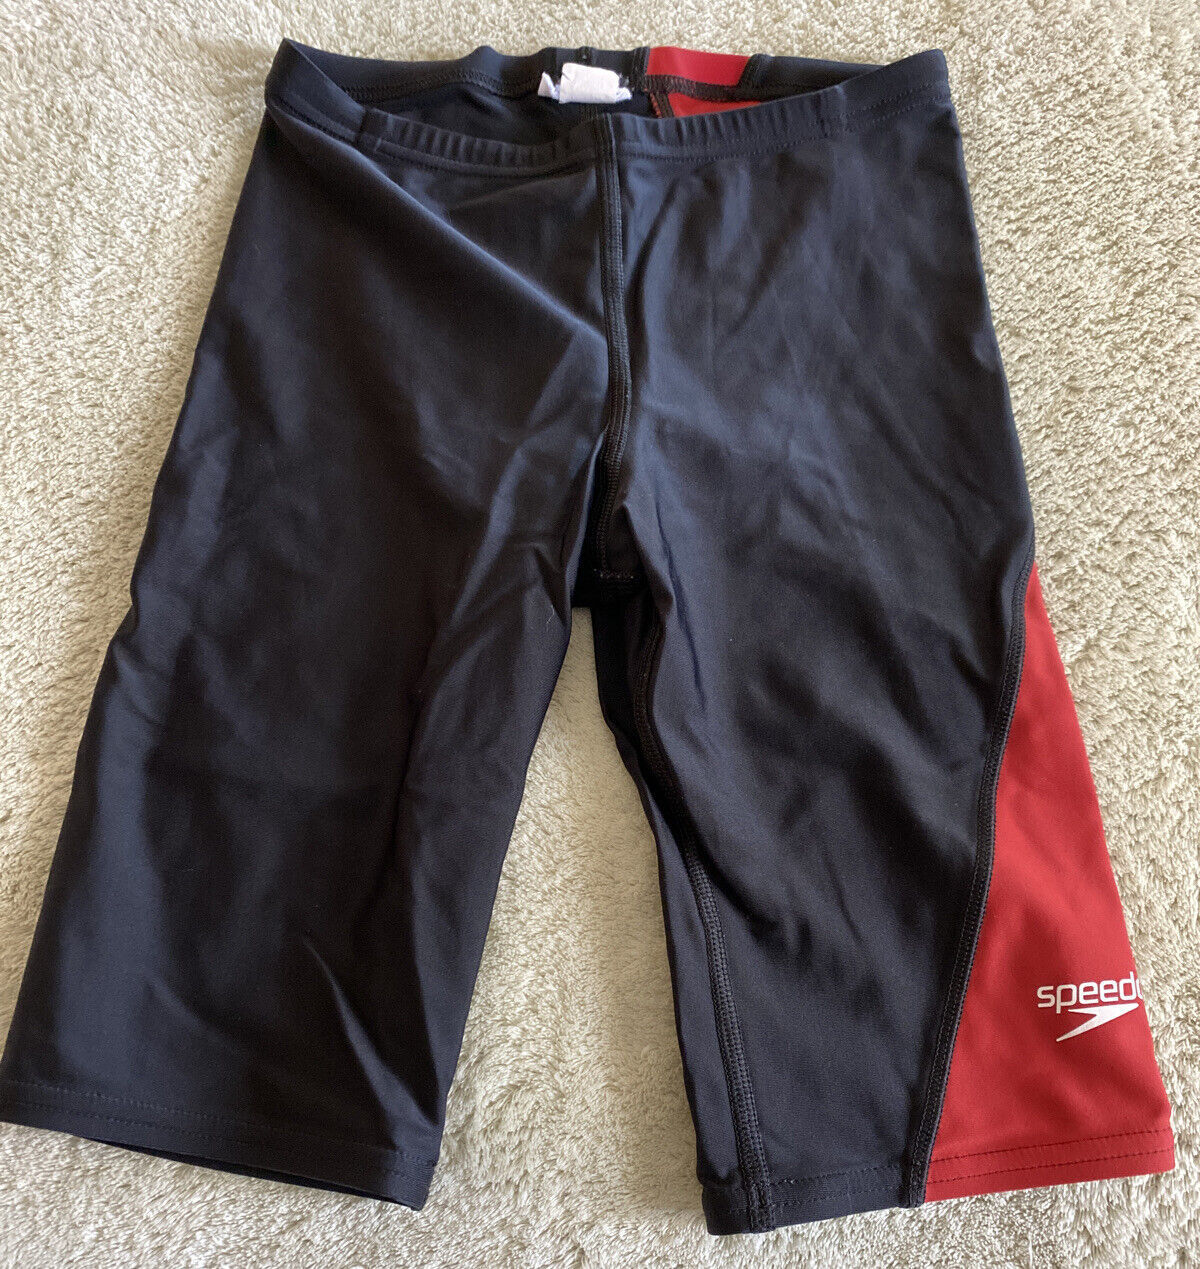 Primary image for Speedo PowerFlex Eco Boys Black Red Jammer Drawstring Swim Shorts Size 26